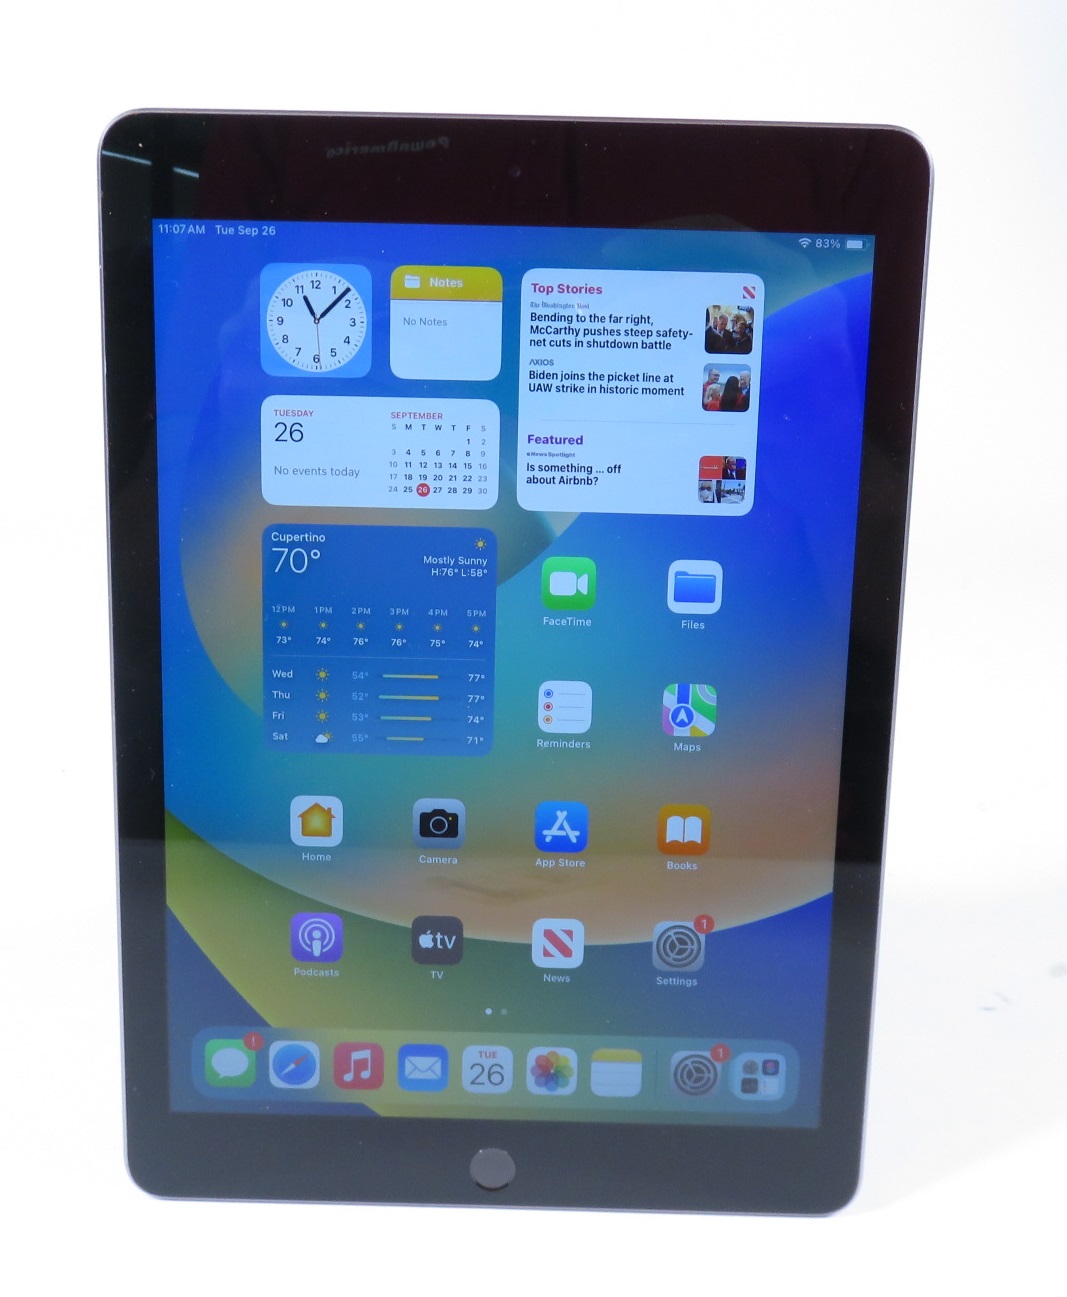 Apple iPad Pro 12.9 Inch (6th Gen) 128GB Storage